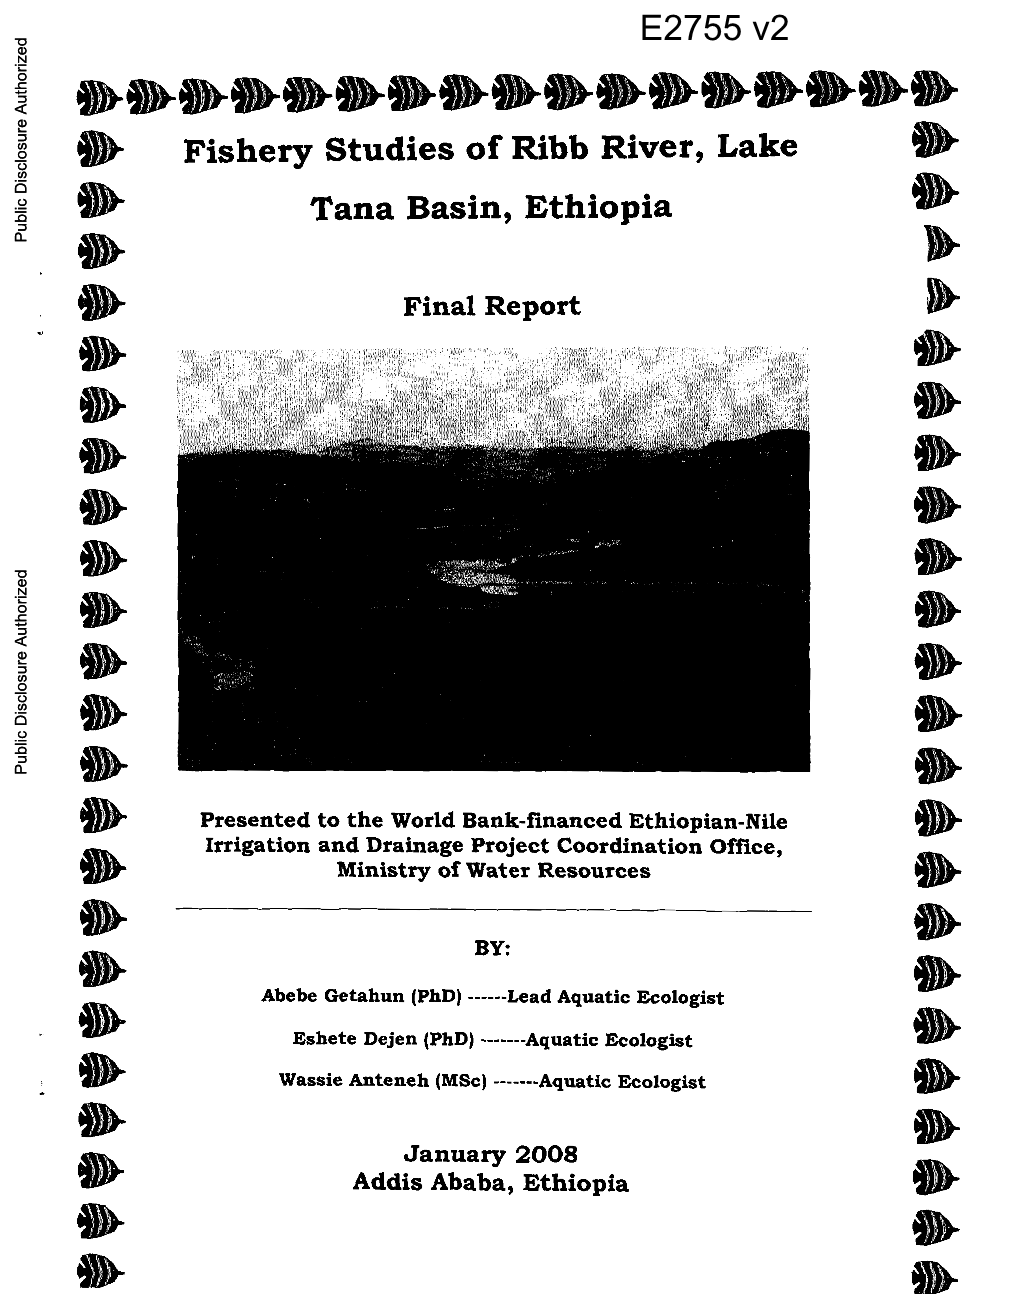 Fishery Studies of Ribb River, Lake